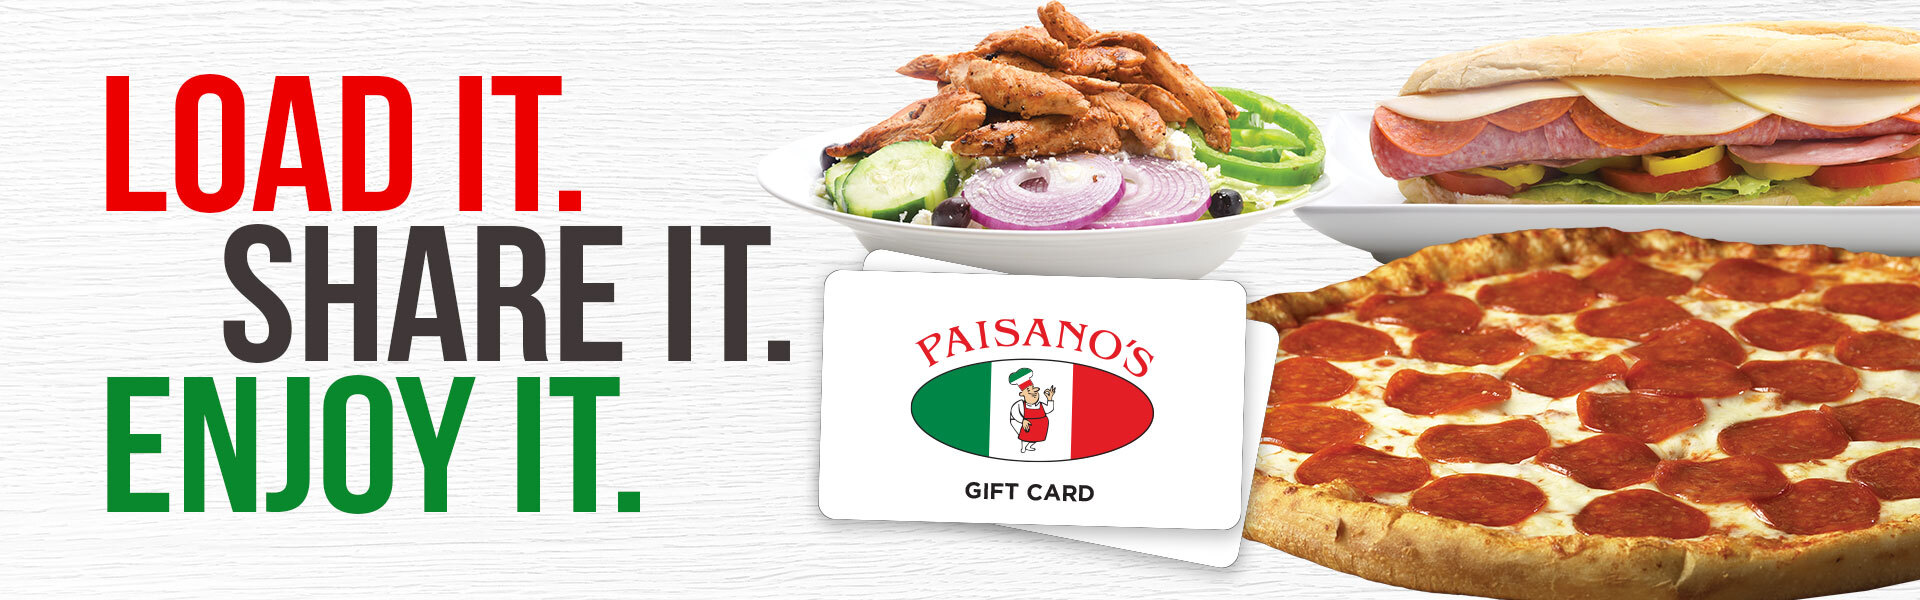 Win Free Football Tickets from Paisano's! - Welcome Paisano's Pizza  Restaurant